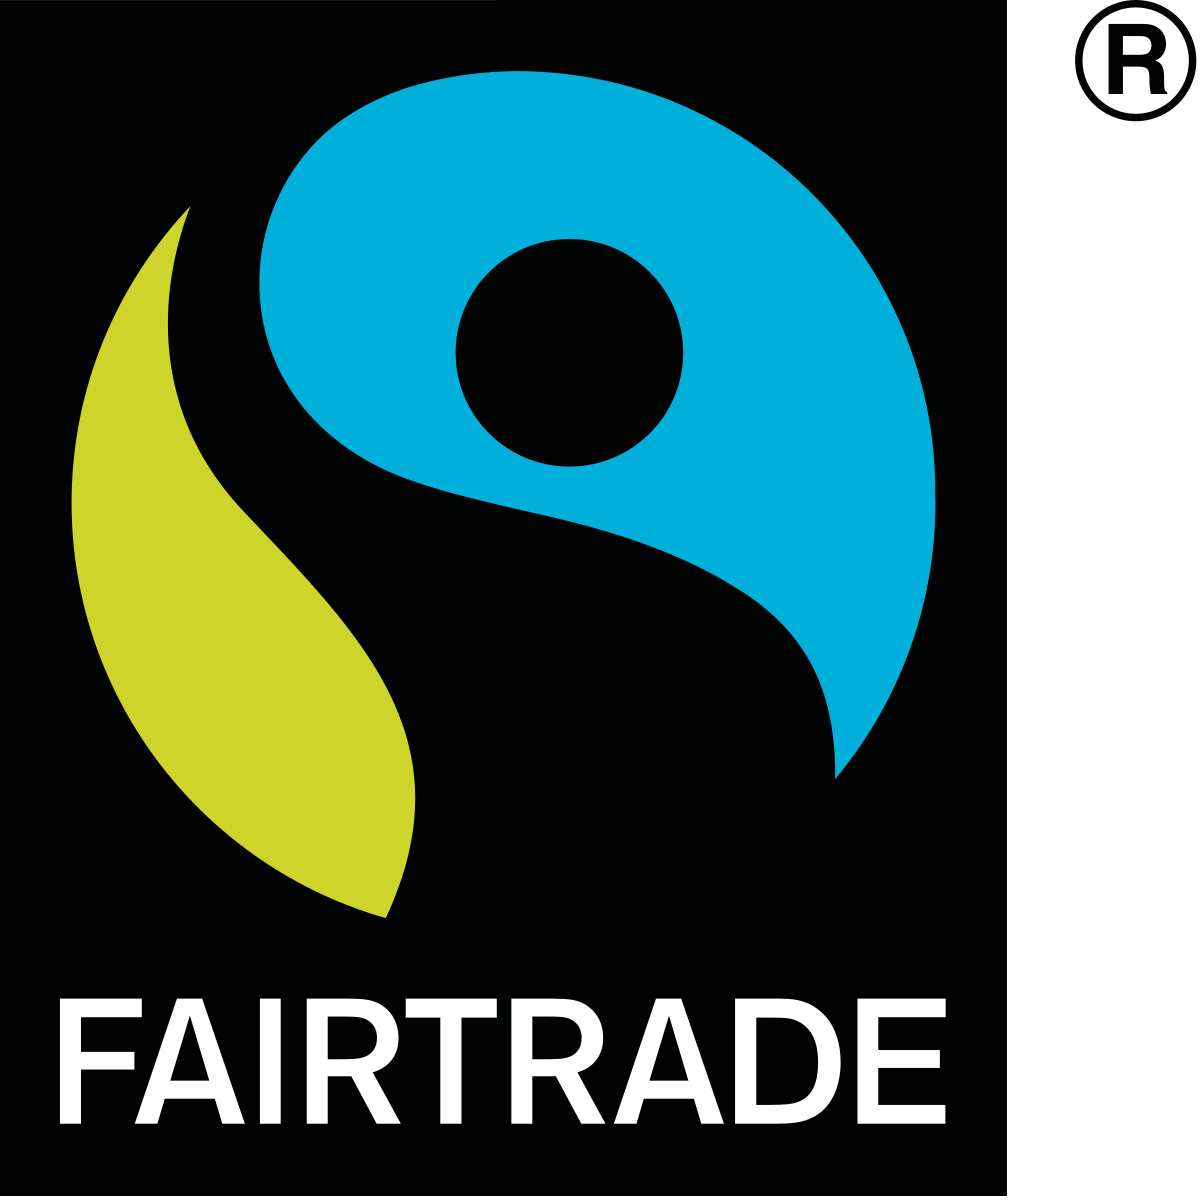 Fairtrade Certification Mark.s